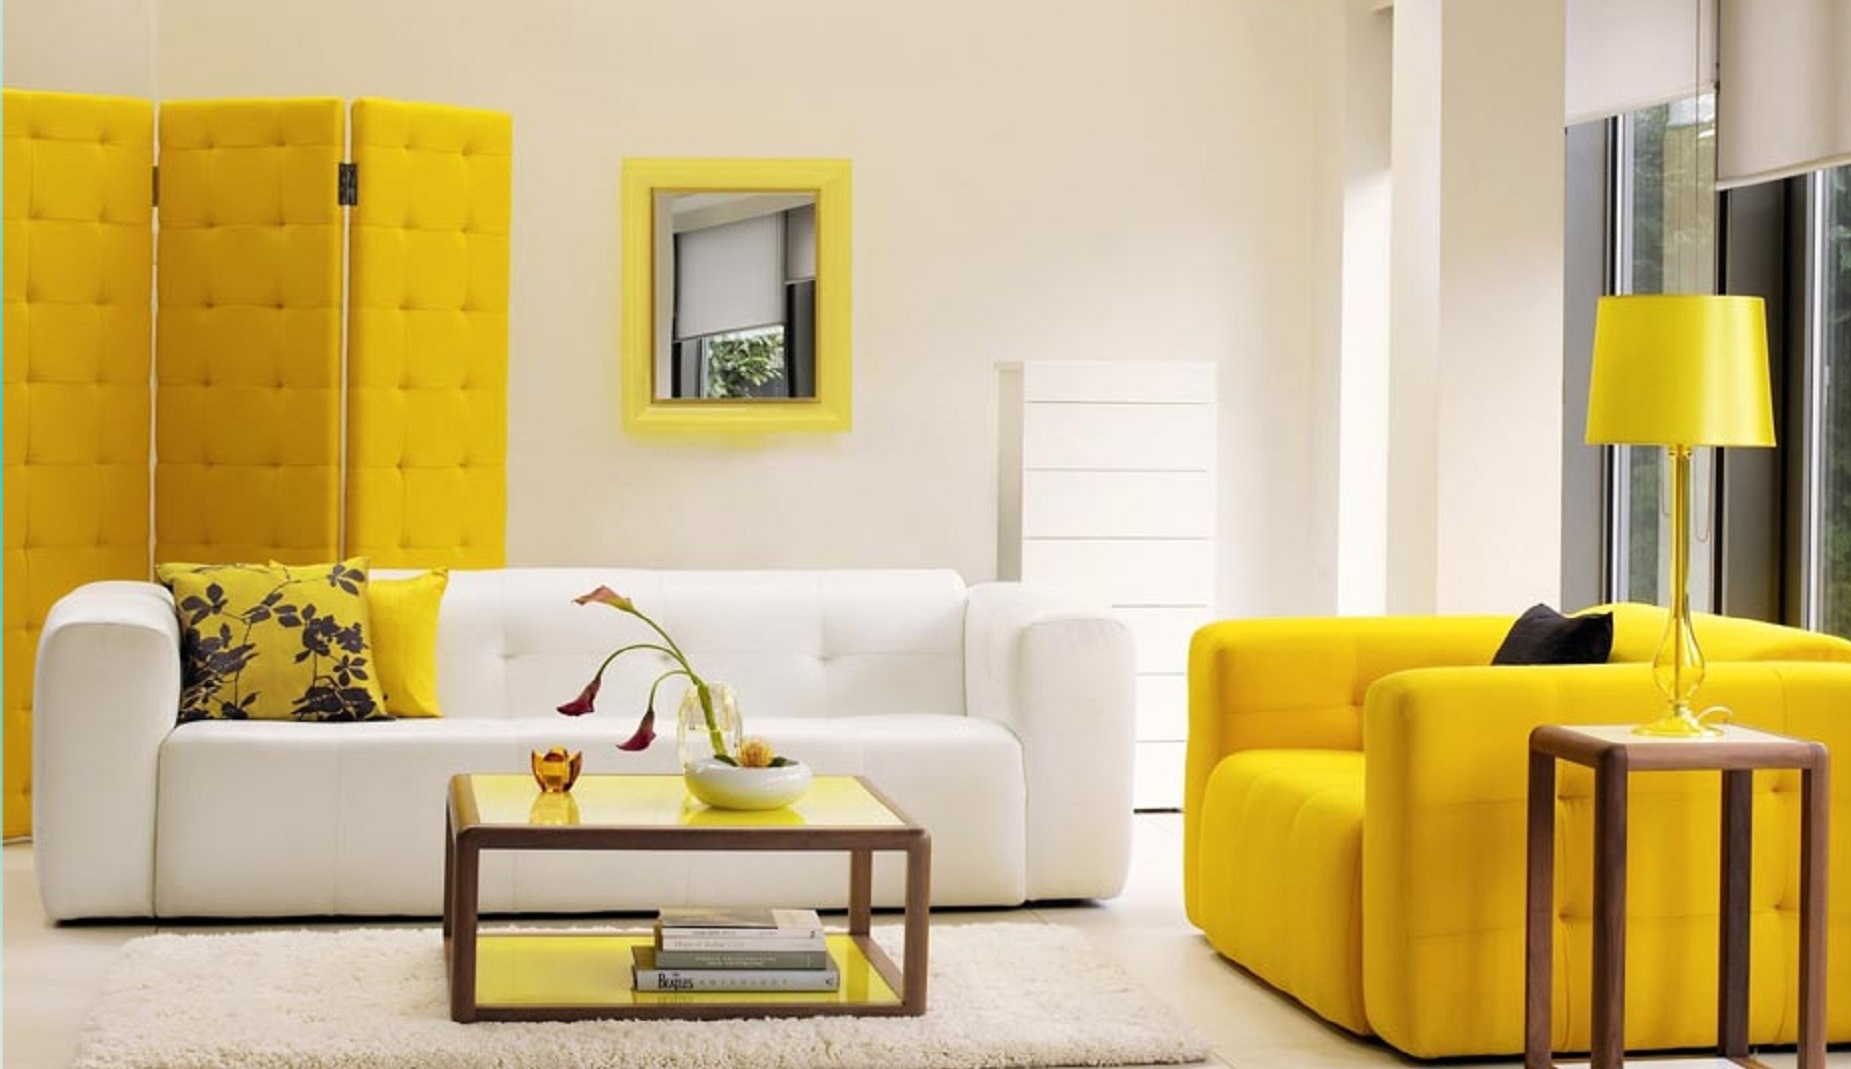 دکوراسیون با رنگ زرد - بهترین رنگ دکوراسیون خانه